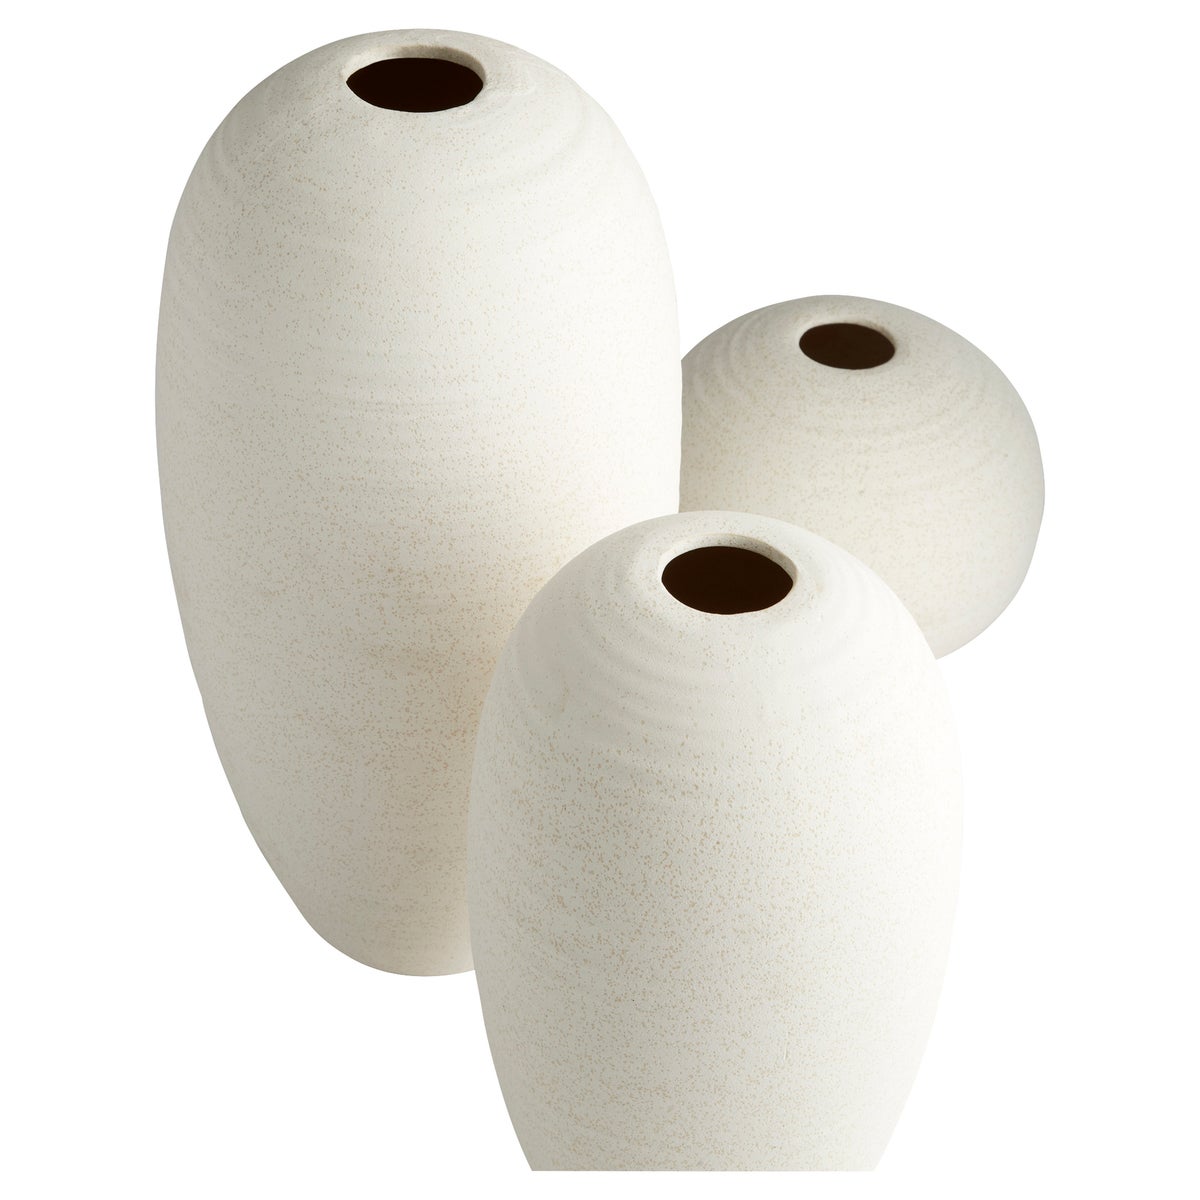 Perennial Vase | White - Medium